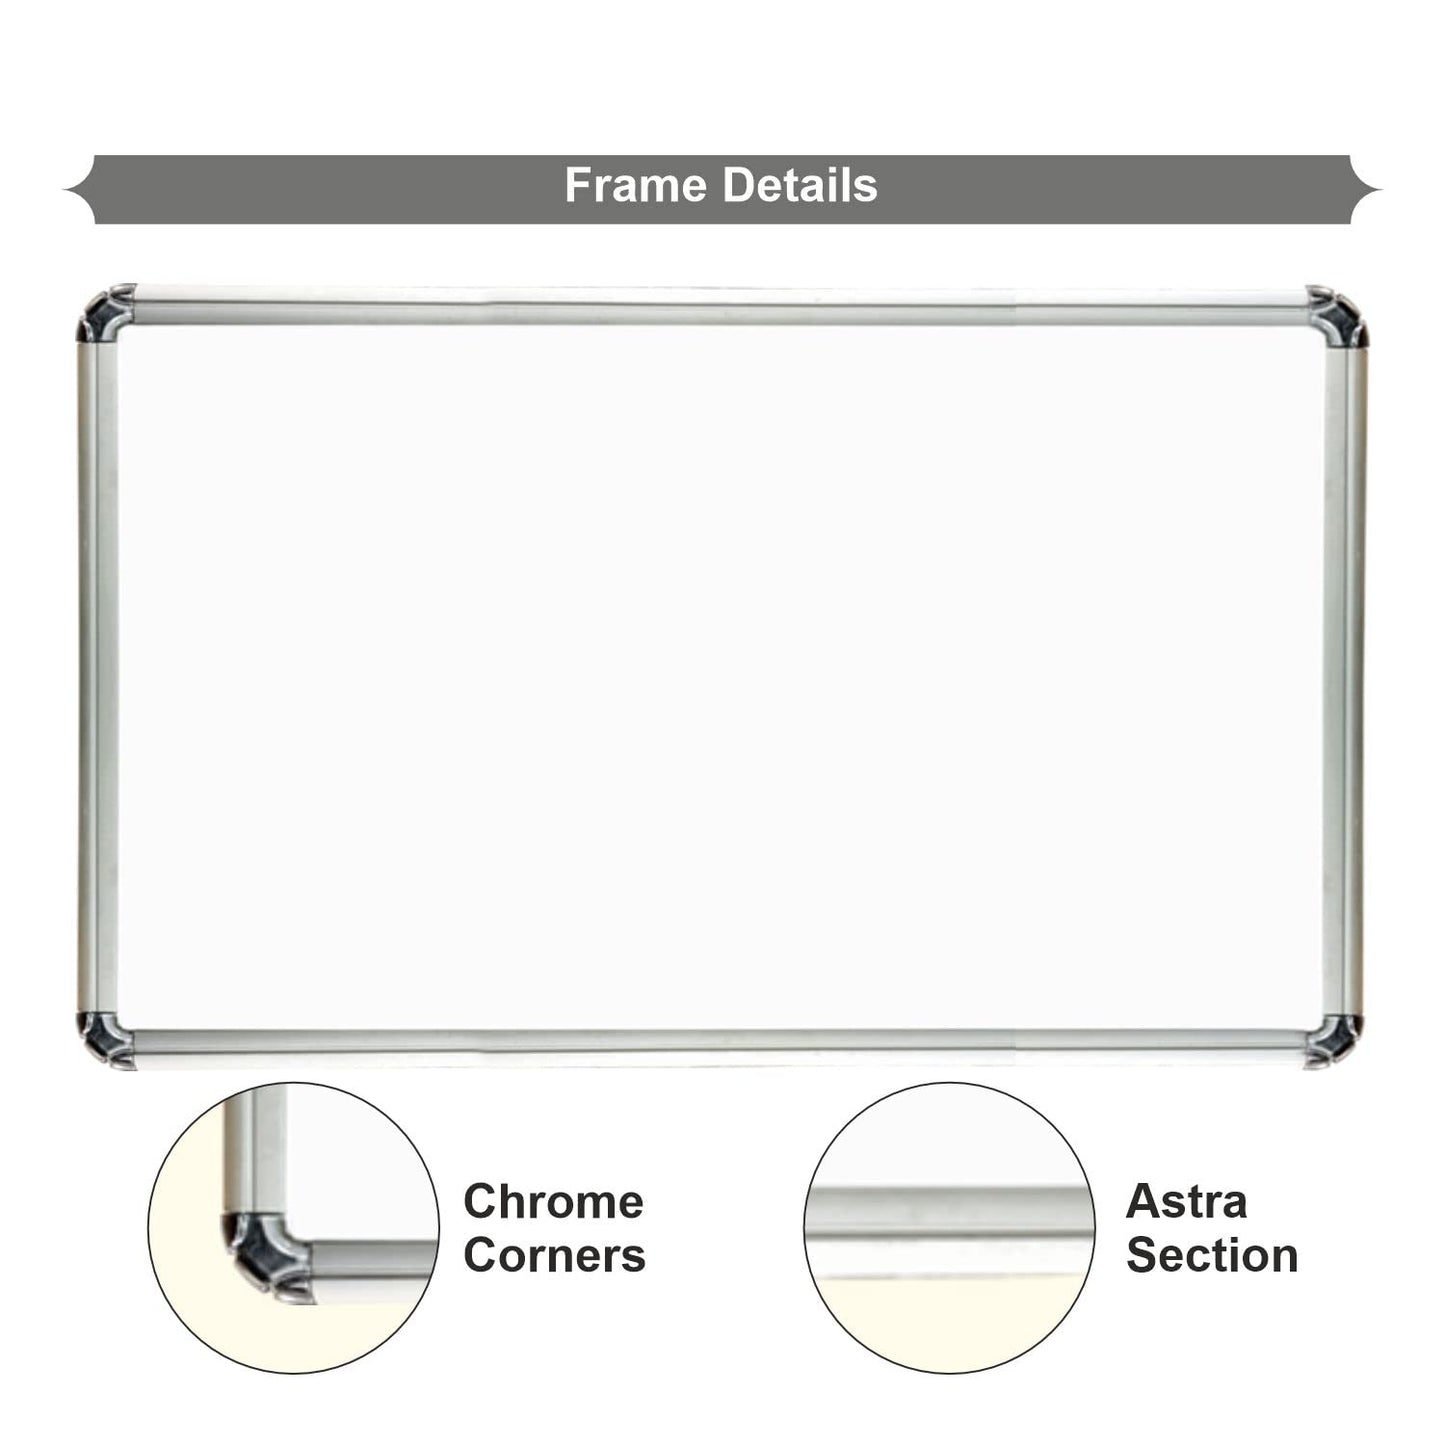 Digismart Board Whiteboard Nova Channel for Office, Home & School Aluminum Frame (Pack of 1) (Non Magnetic)